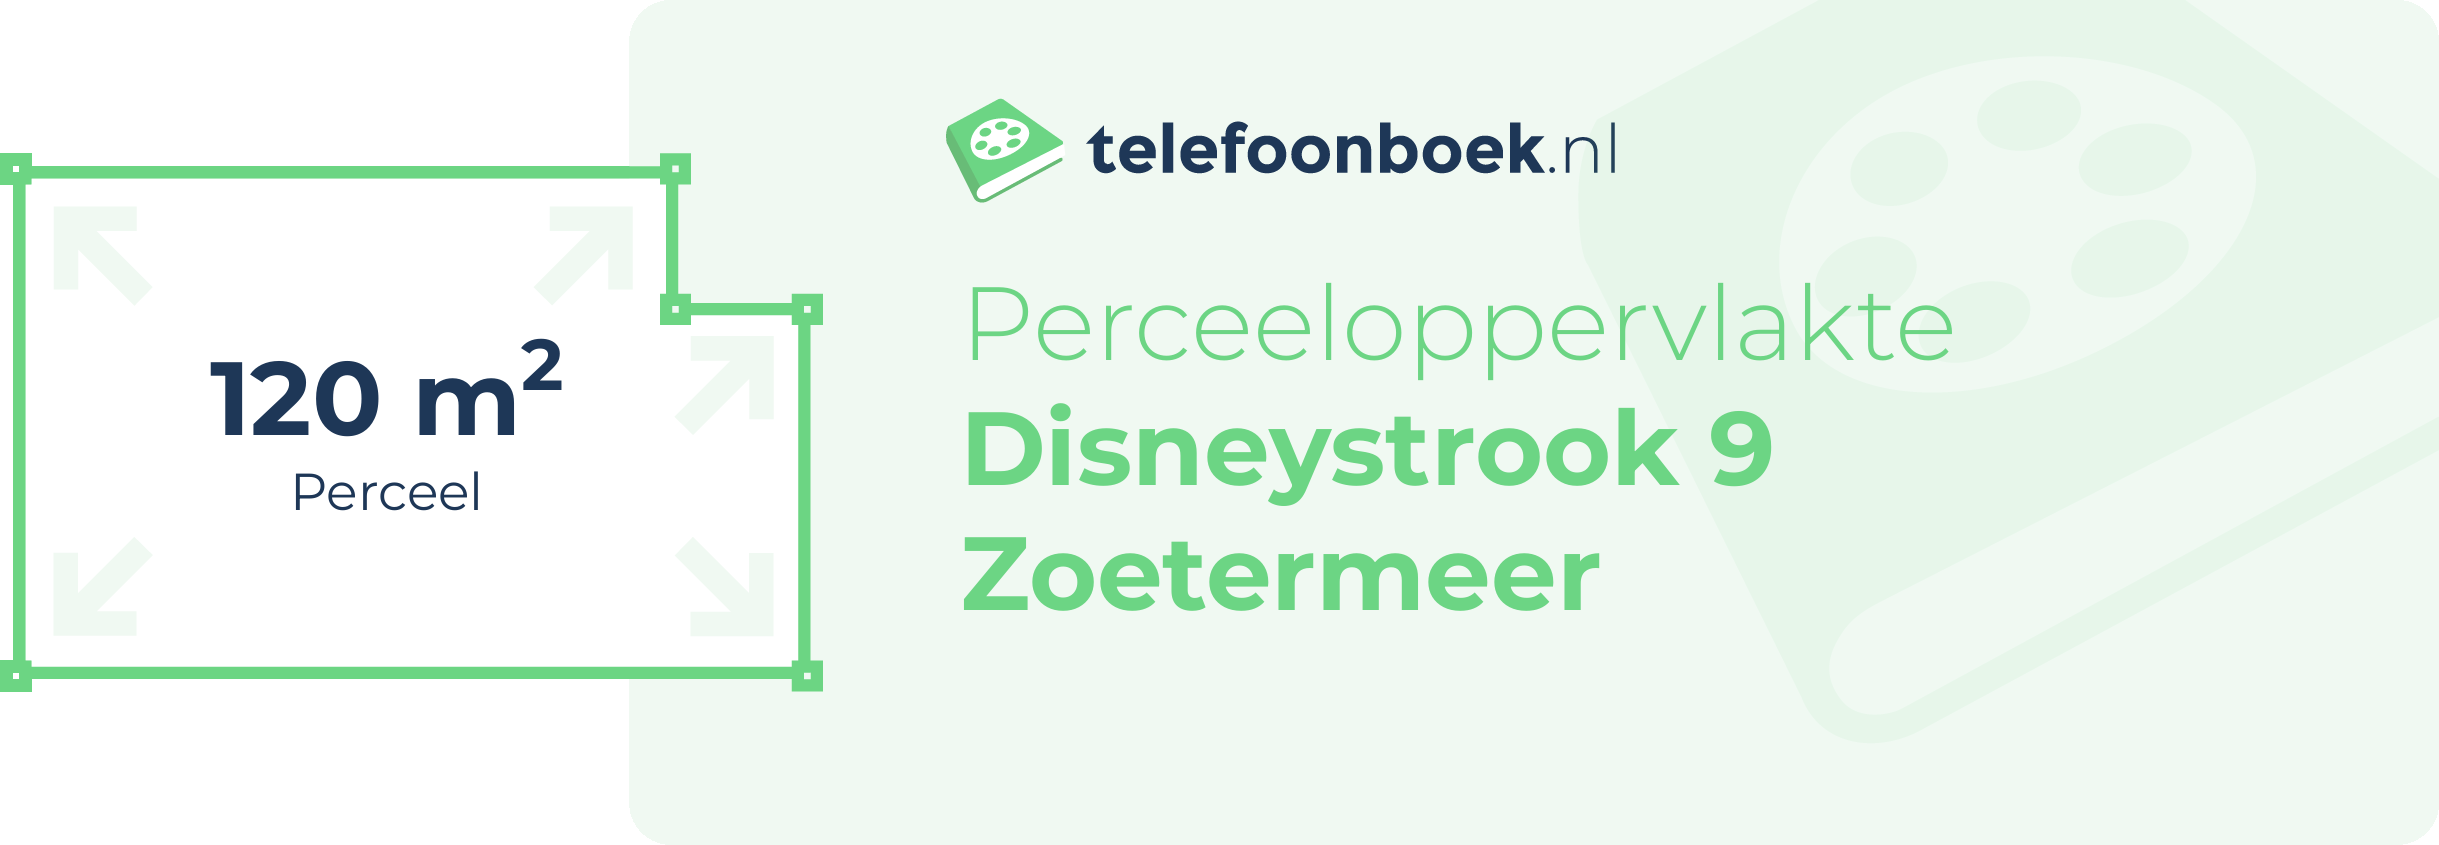 Perceeloppervlakte Disneystrook 9 Zoetermeer